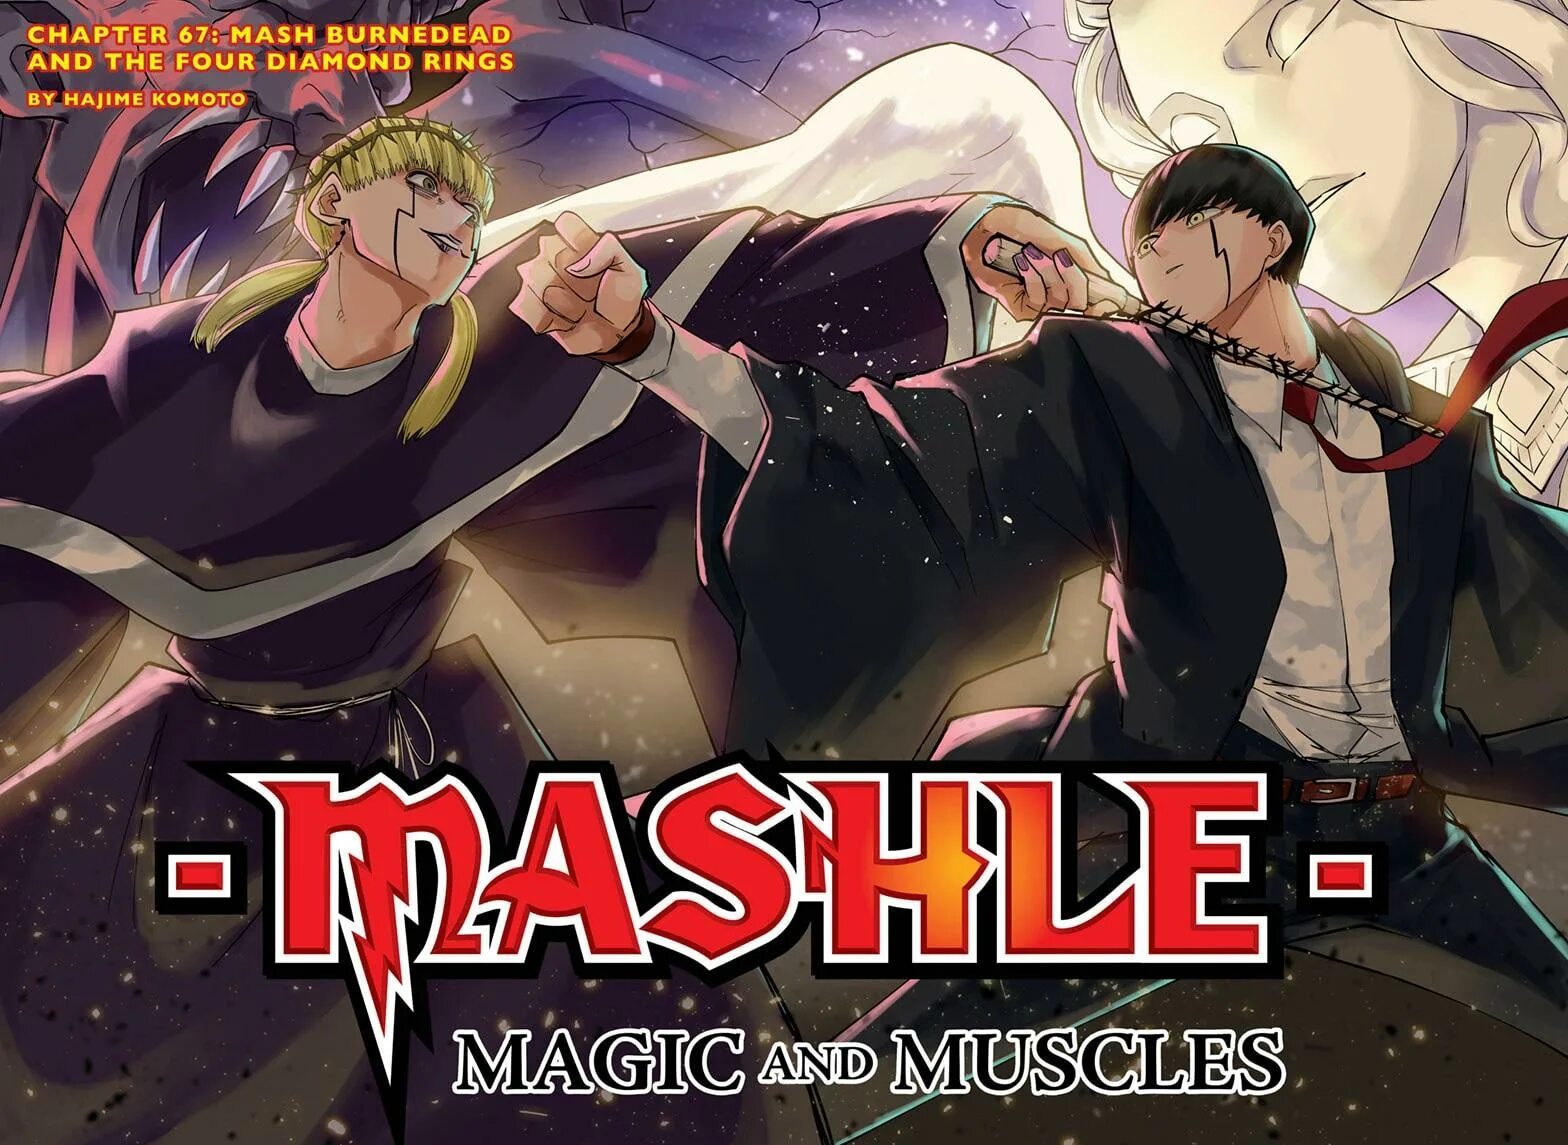 Mashle Burnedead. Mashle: Magic and muscles. Магия и мускулы Манга. Магия и мускулы bang